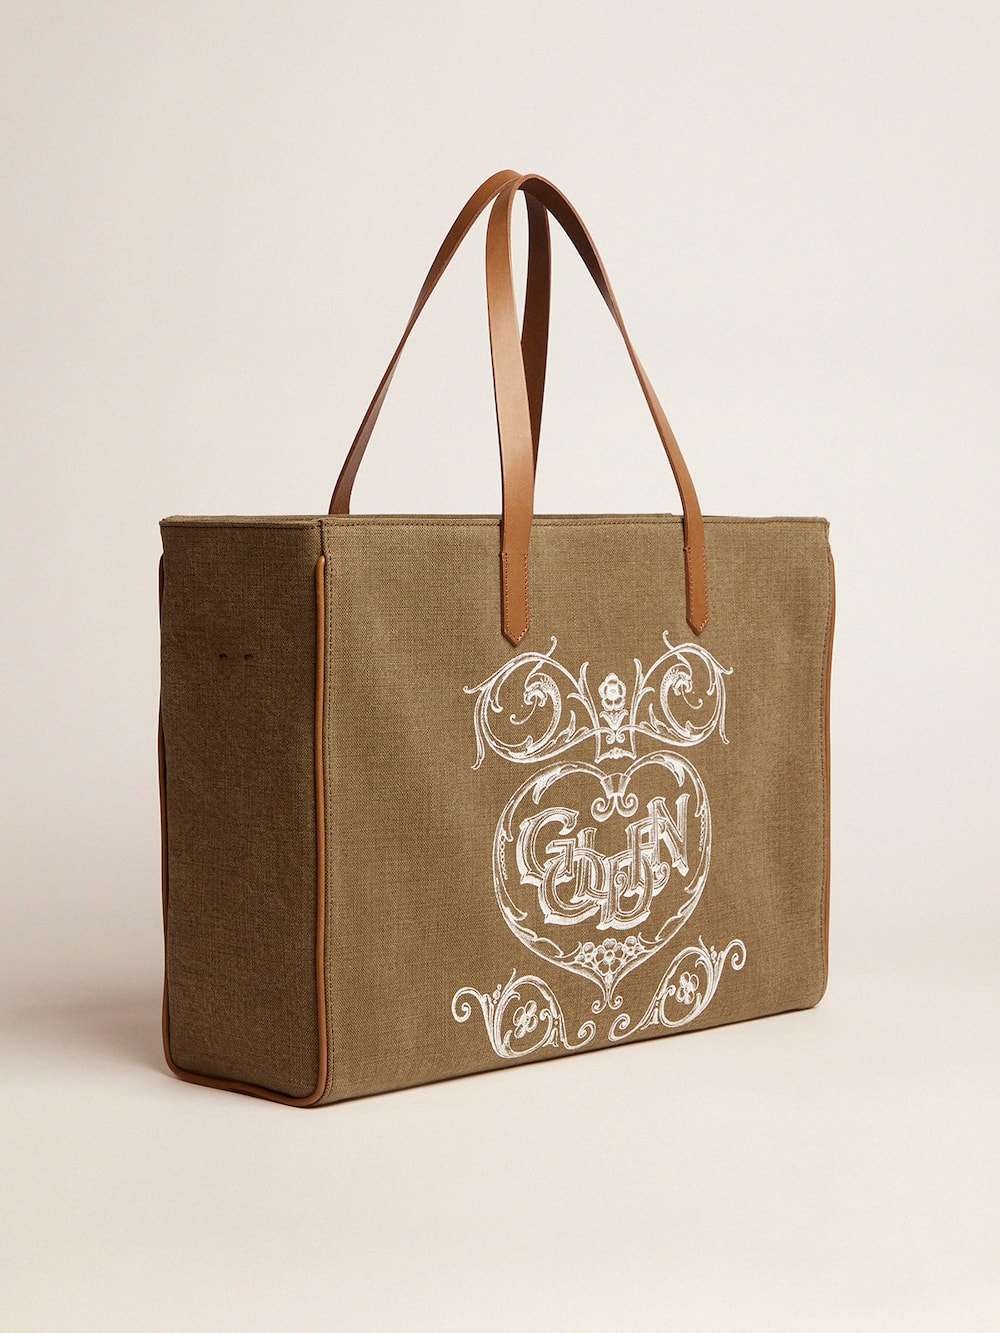 Golden Goose - Sac California Bag en toile vert militaire East-West avec imprimé en sérigraphie in 